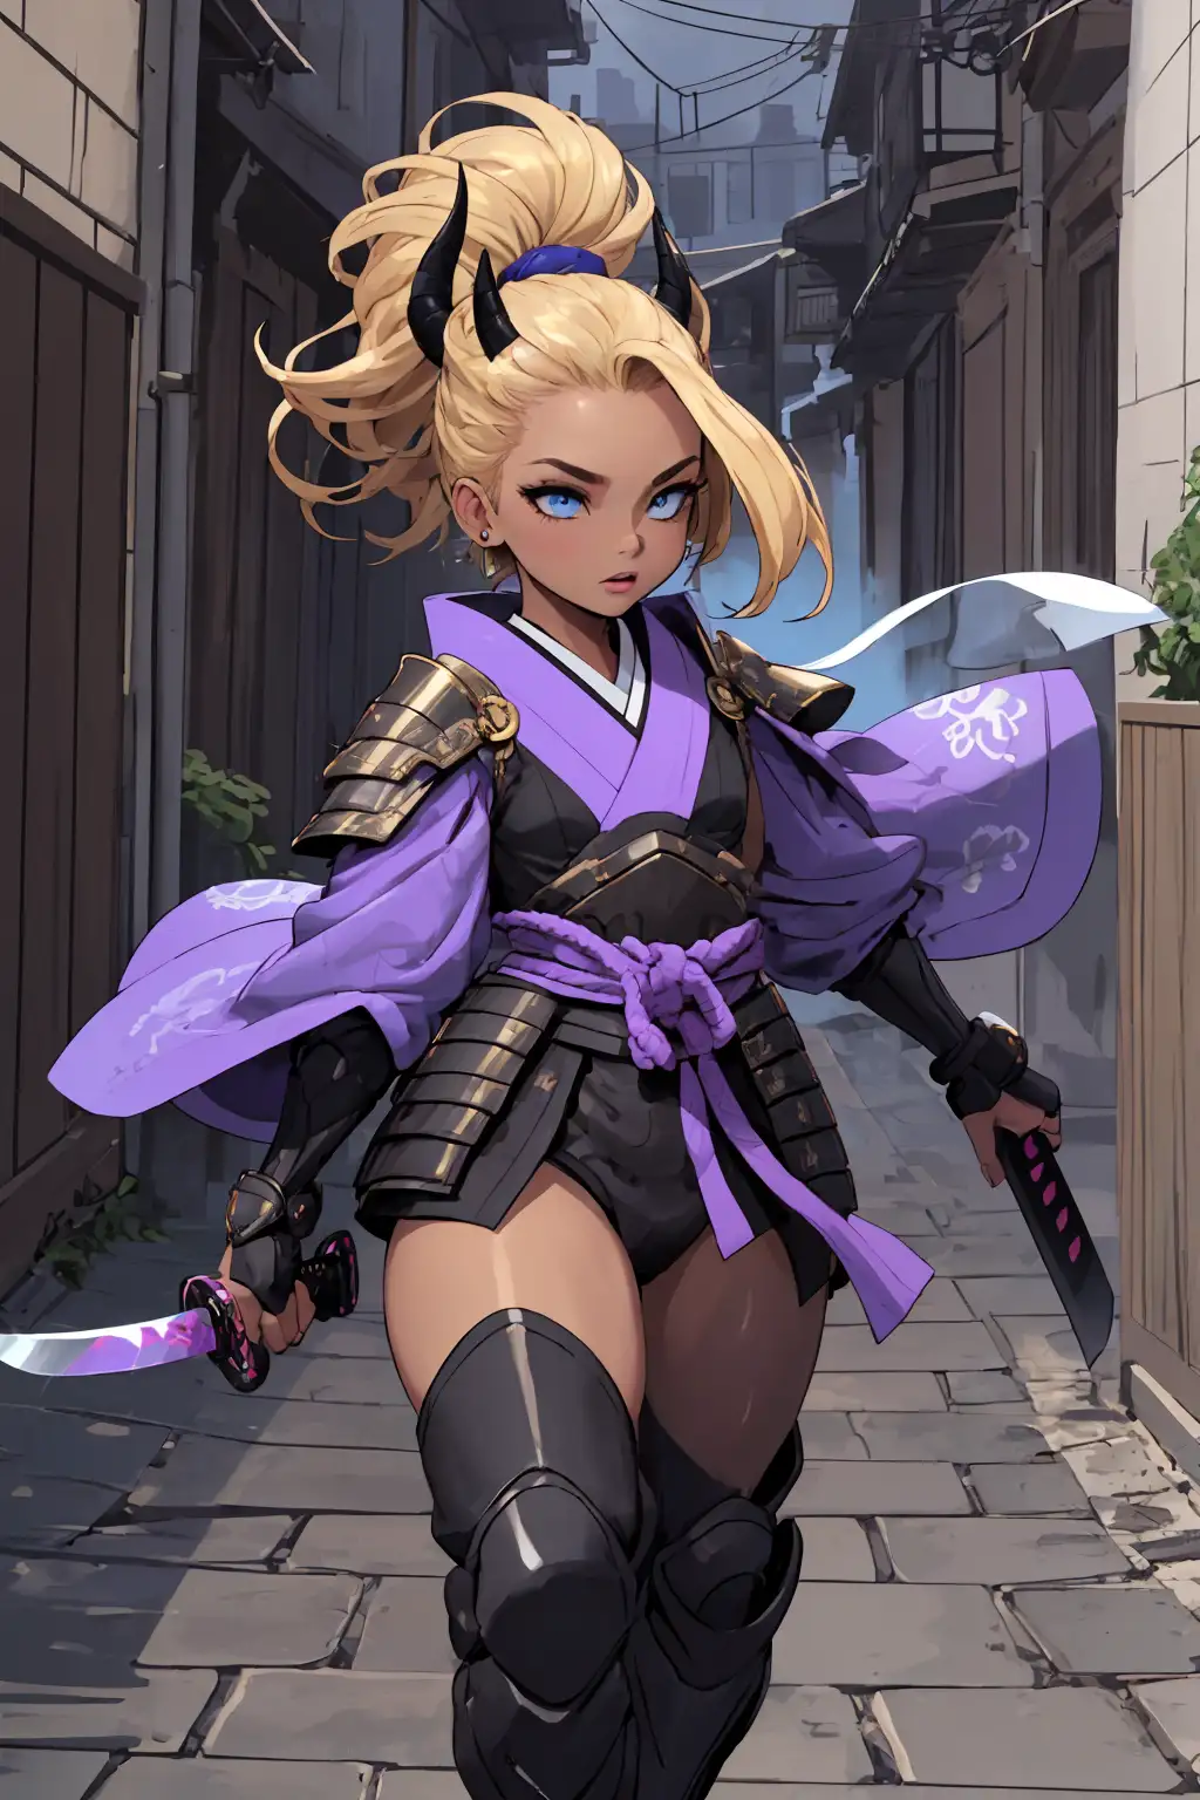 Lighting Style Female Samurai ⚡⚡🥷🏽 image by slime77744784